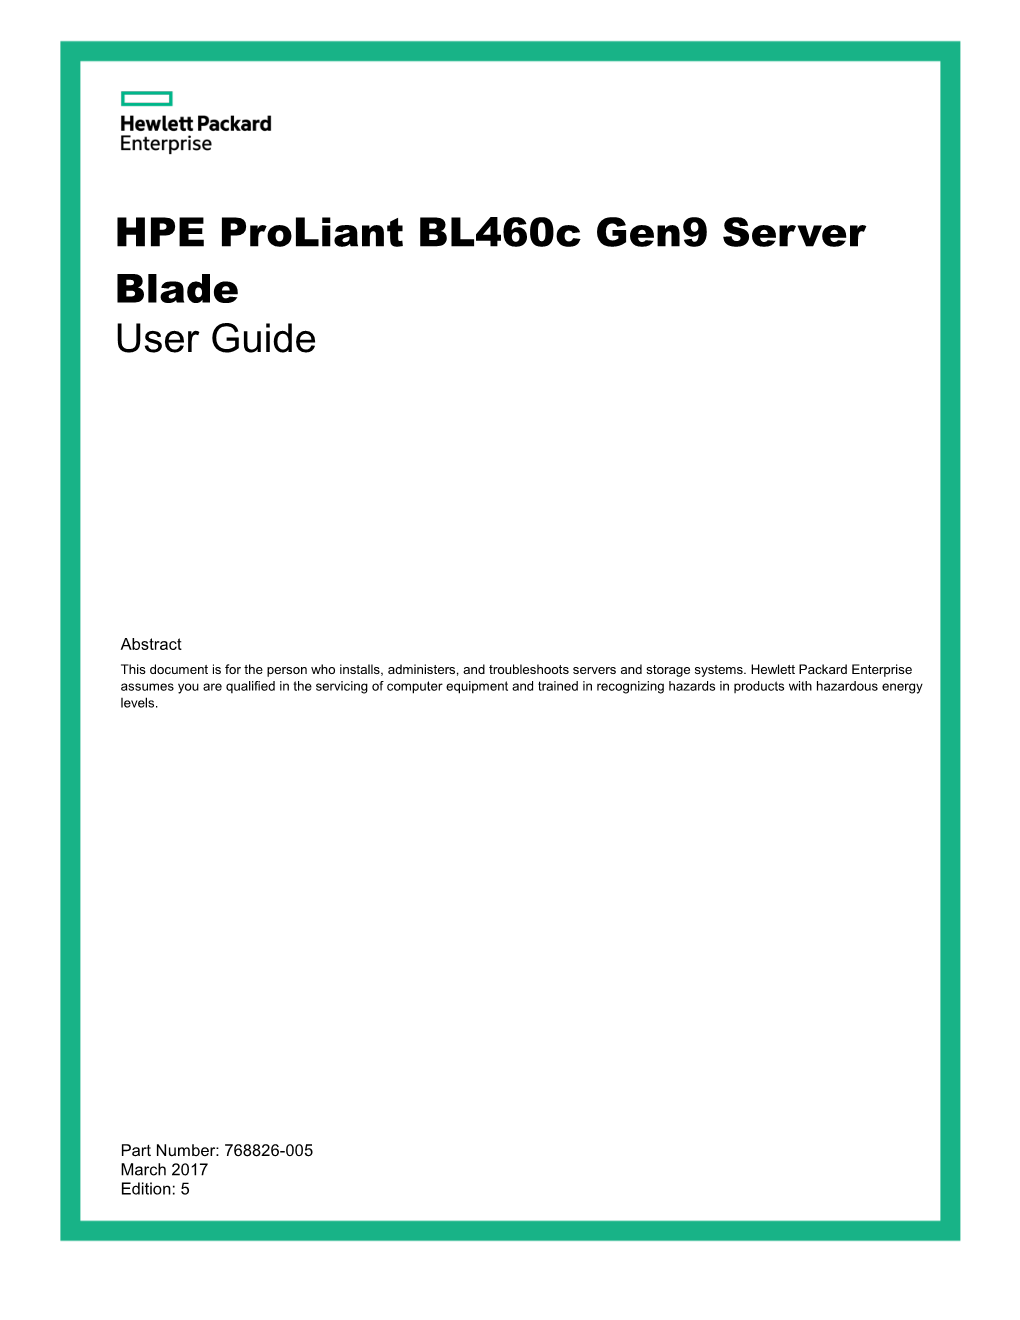 HPE Proliant Bl460c Gen9 Server Blade User Guide